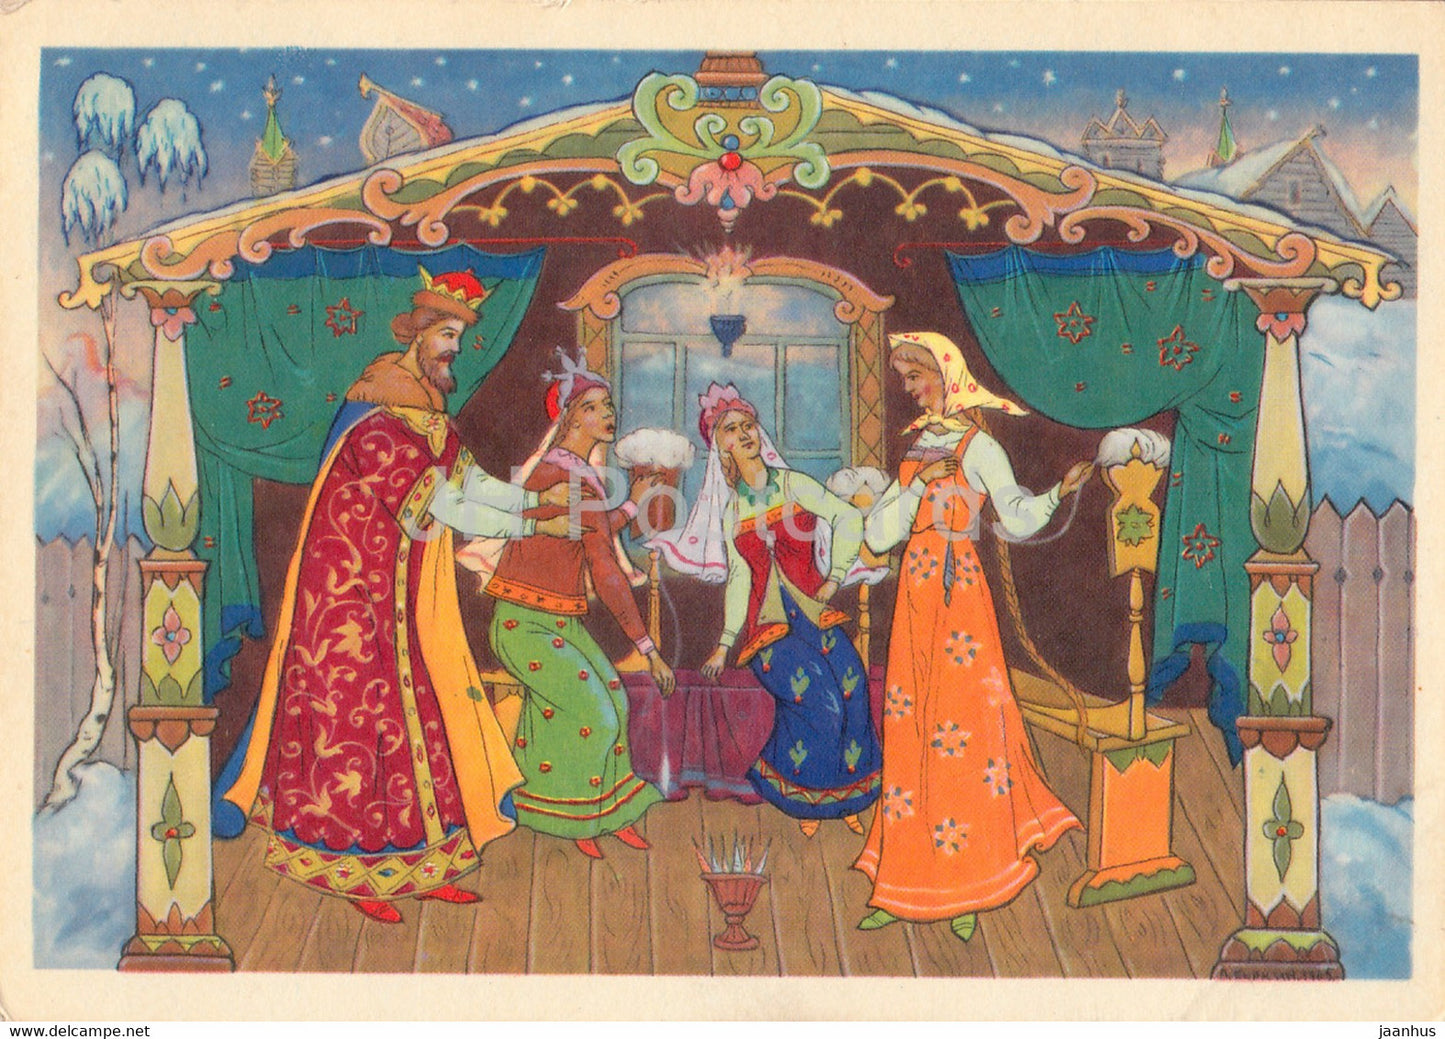 The Tale of Tsar Saltan by A. Pushkin - princess - Fairy Tale - 1966 - Russia USSR - unused - JH Postcards